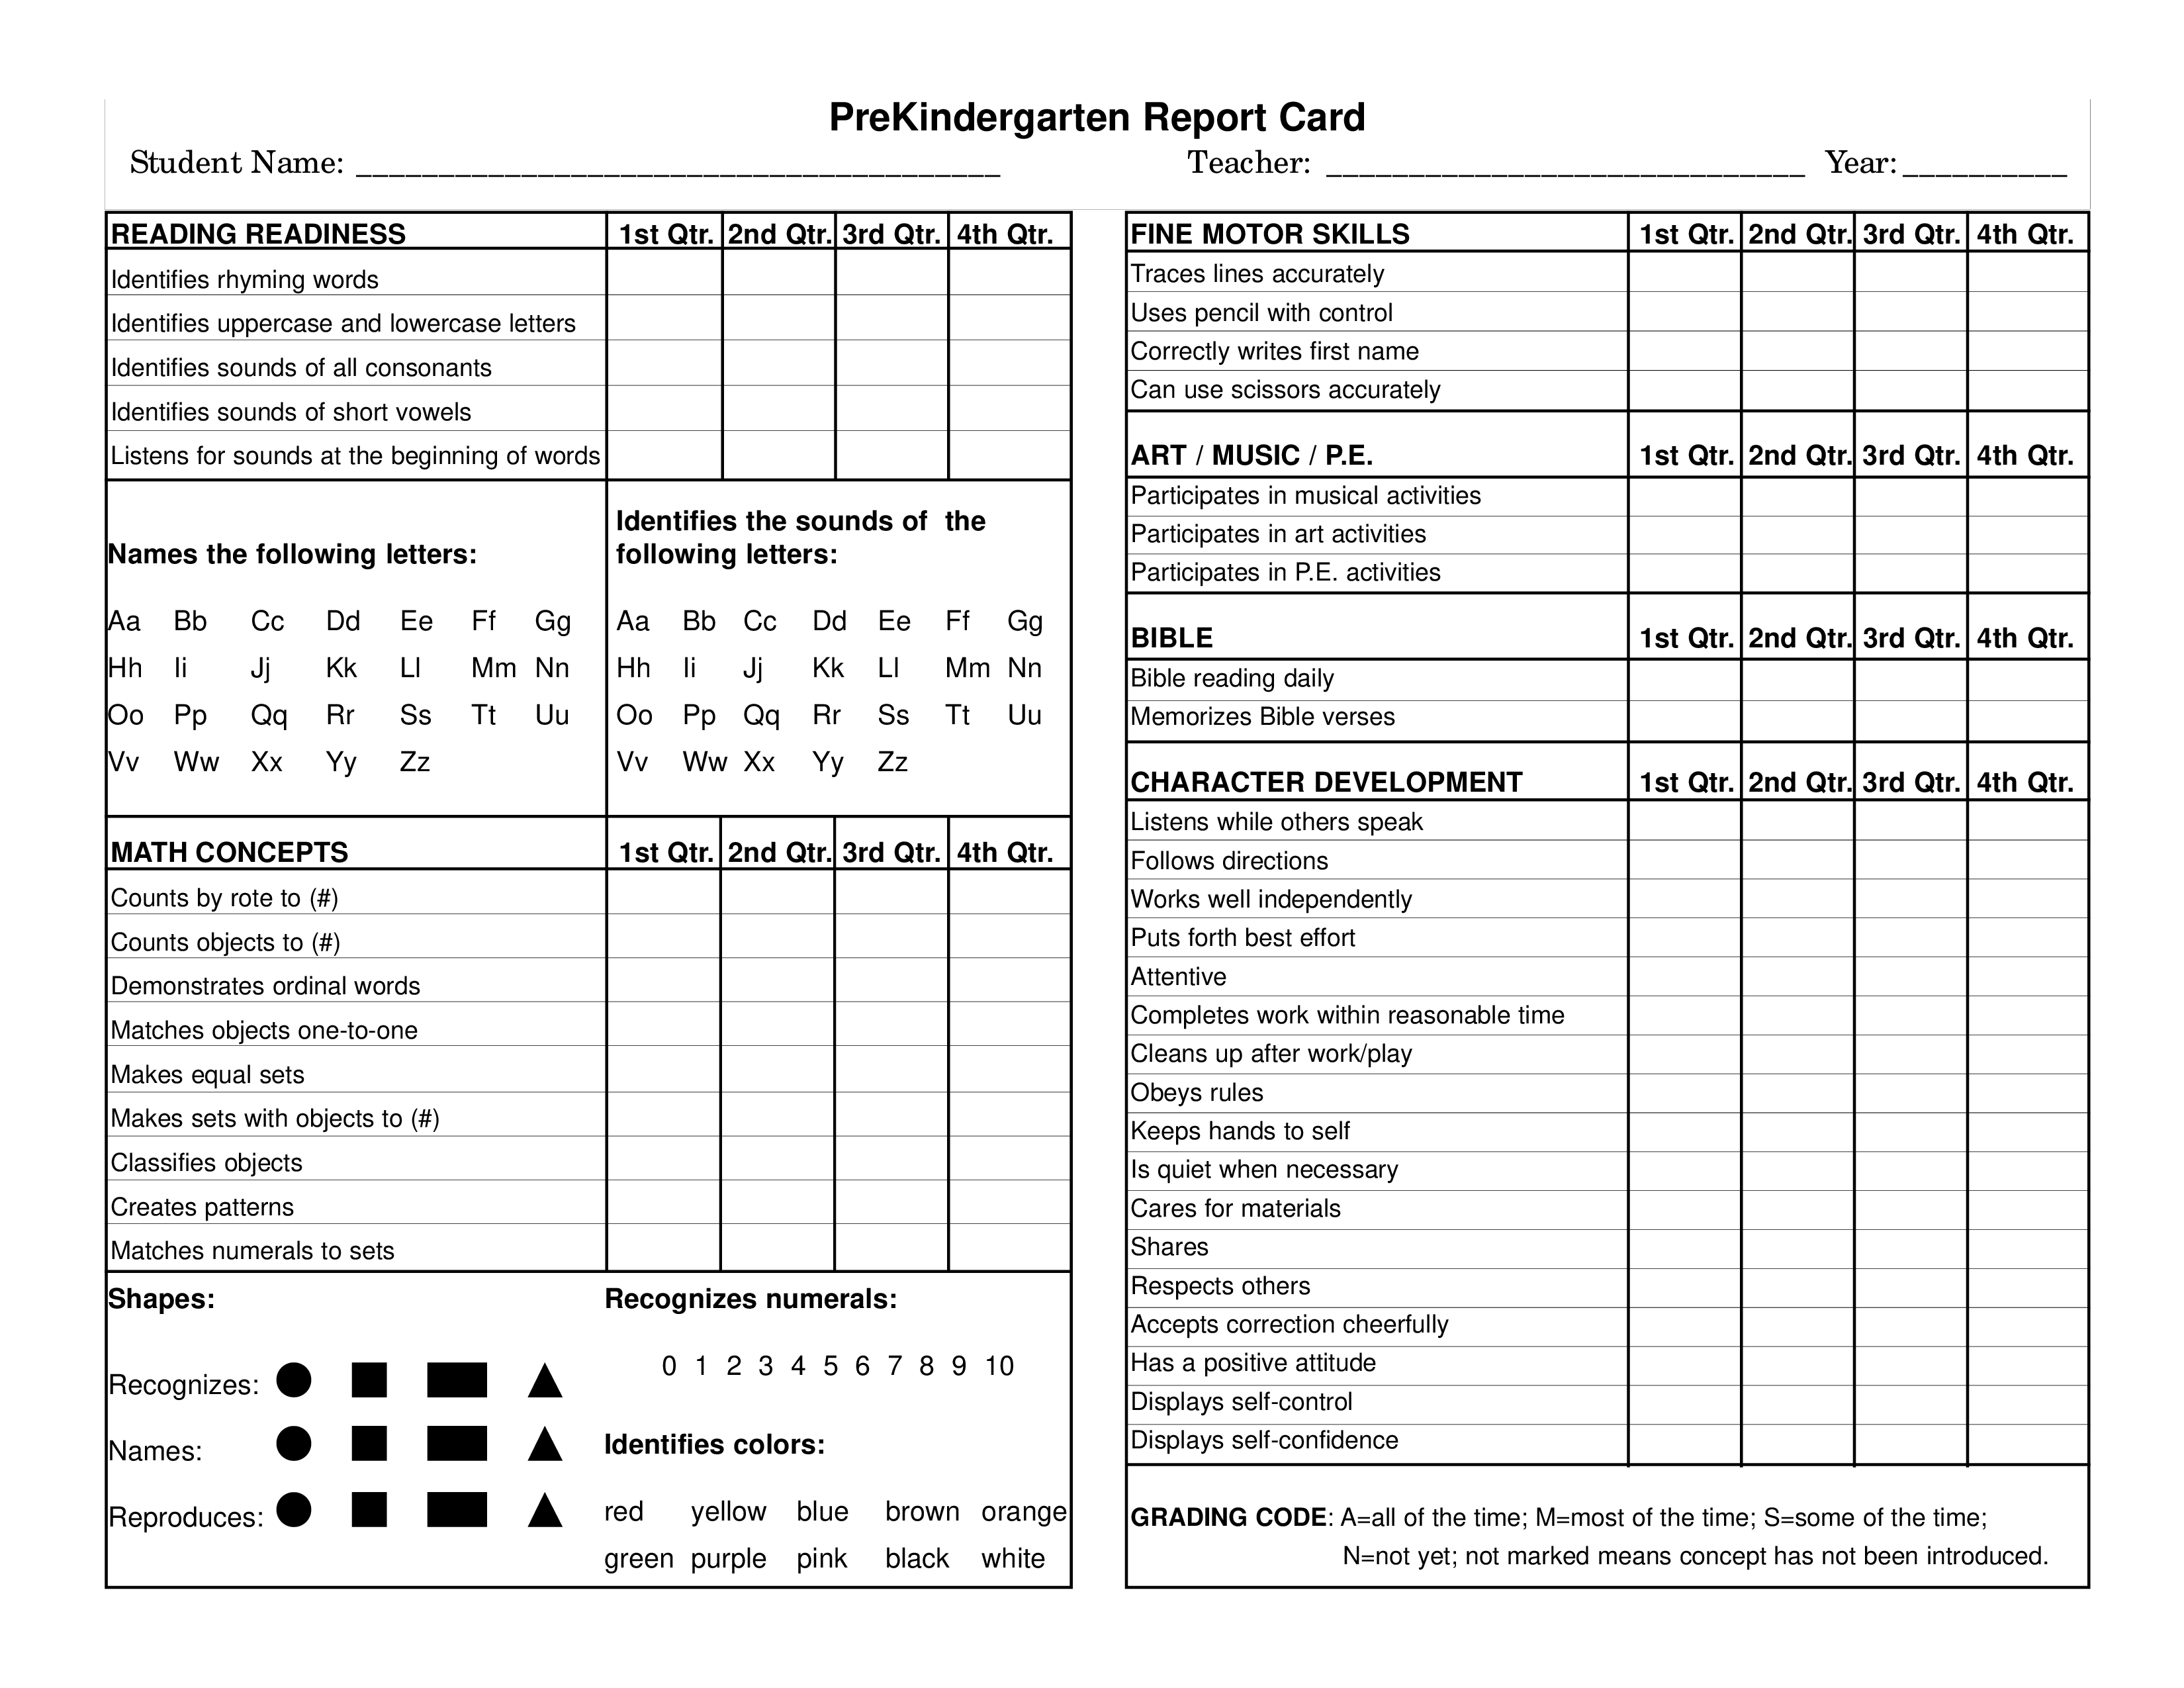 preschool-report-card-templates-at-allbusinesstemplates